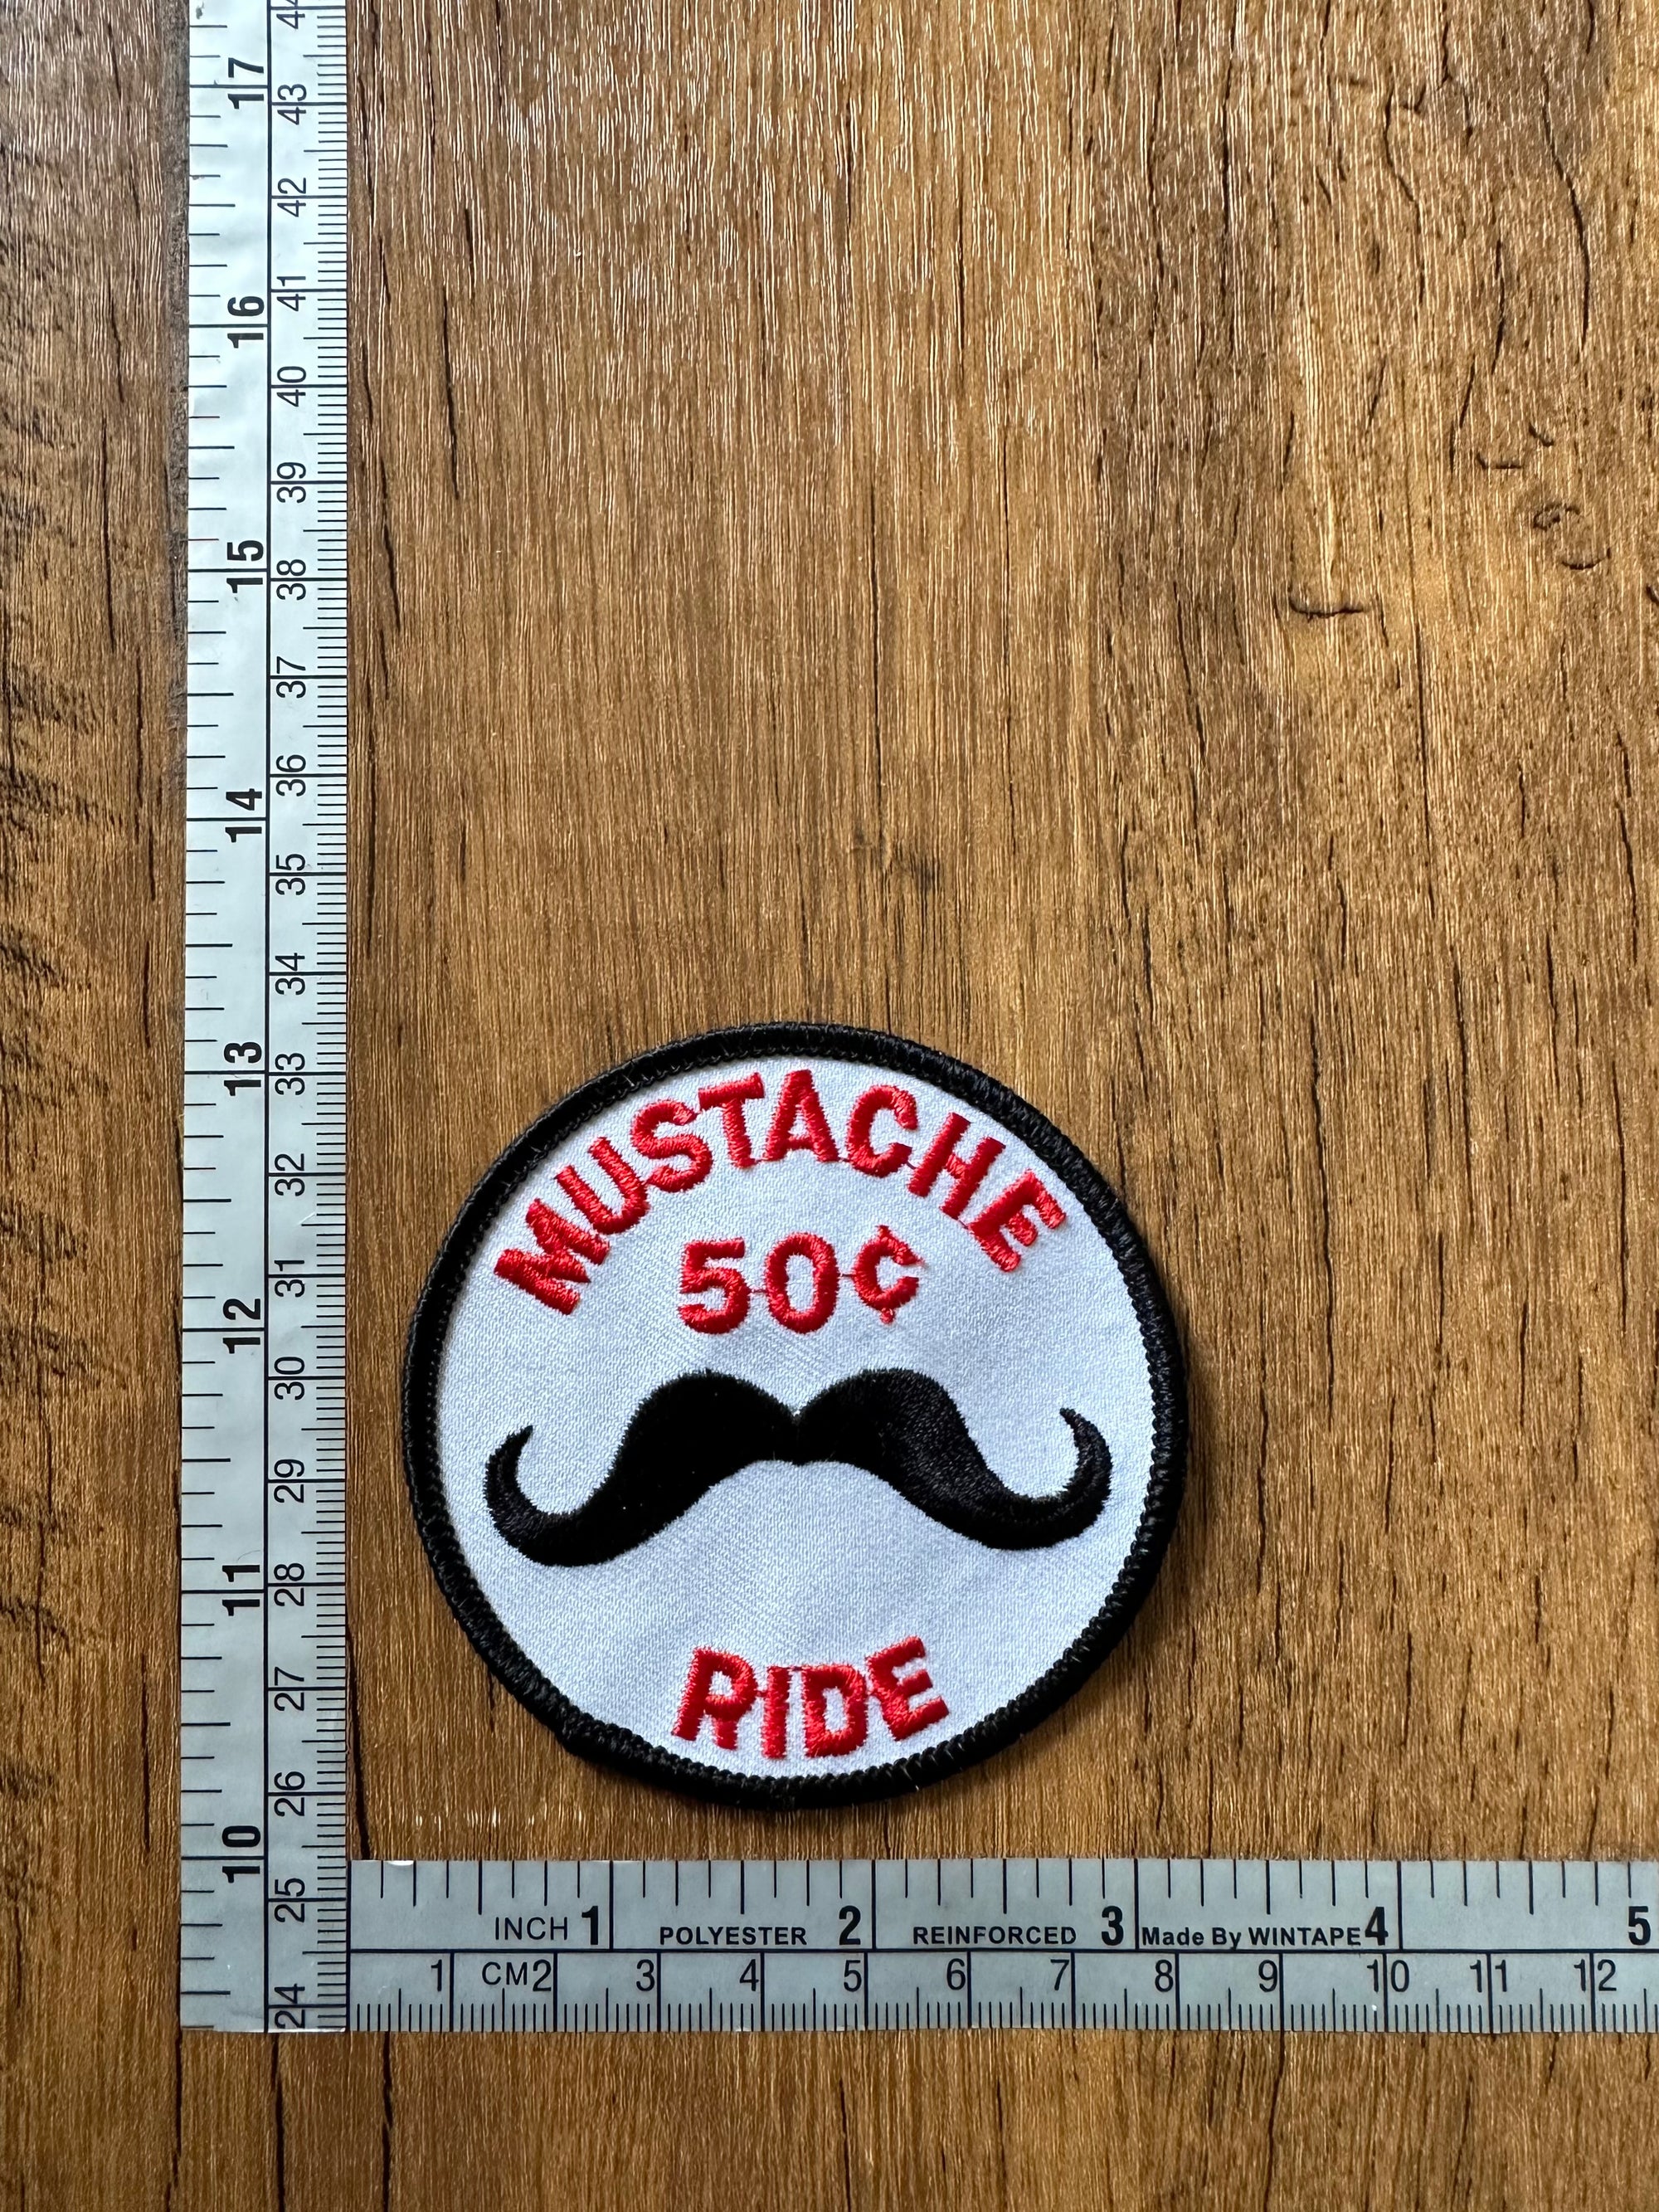 Mustache Rides 50¢